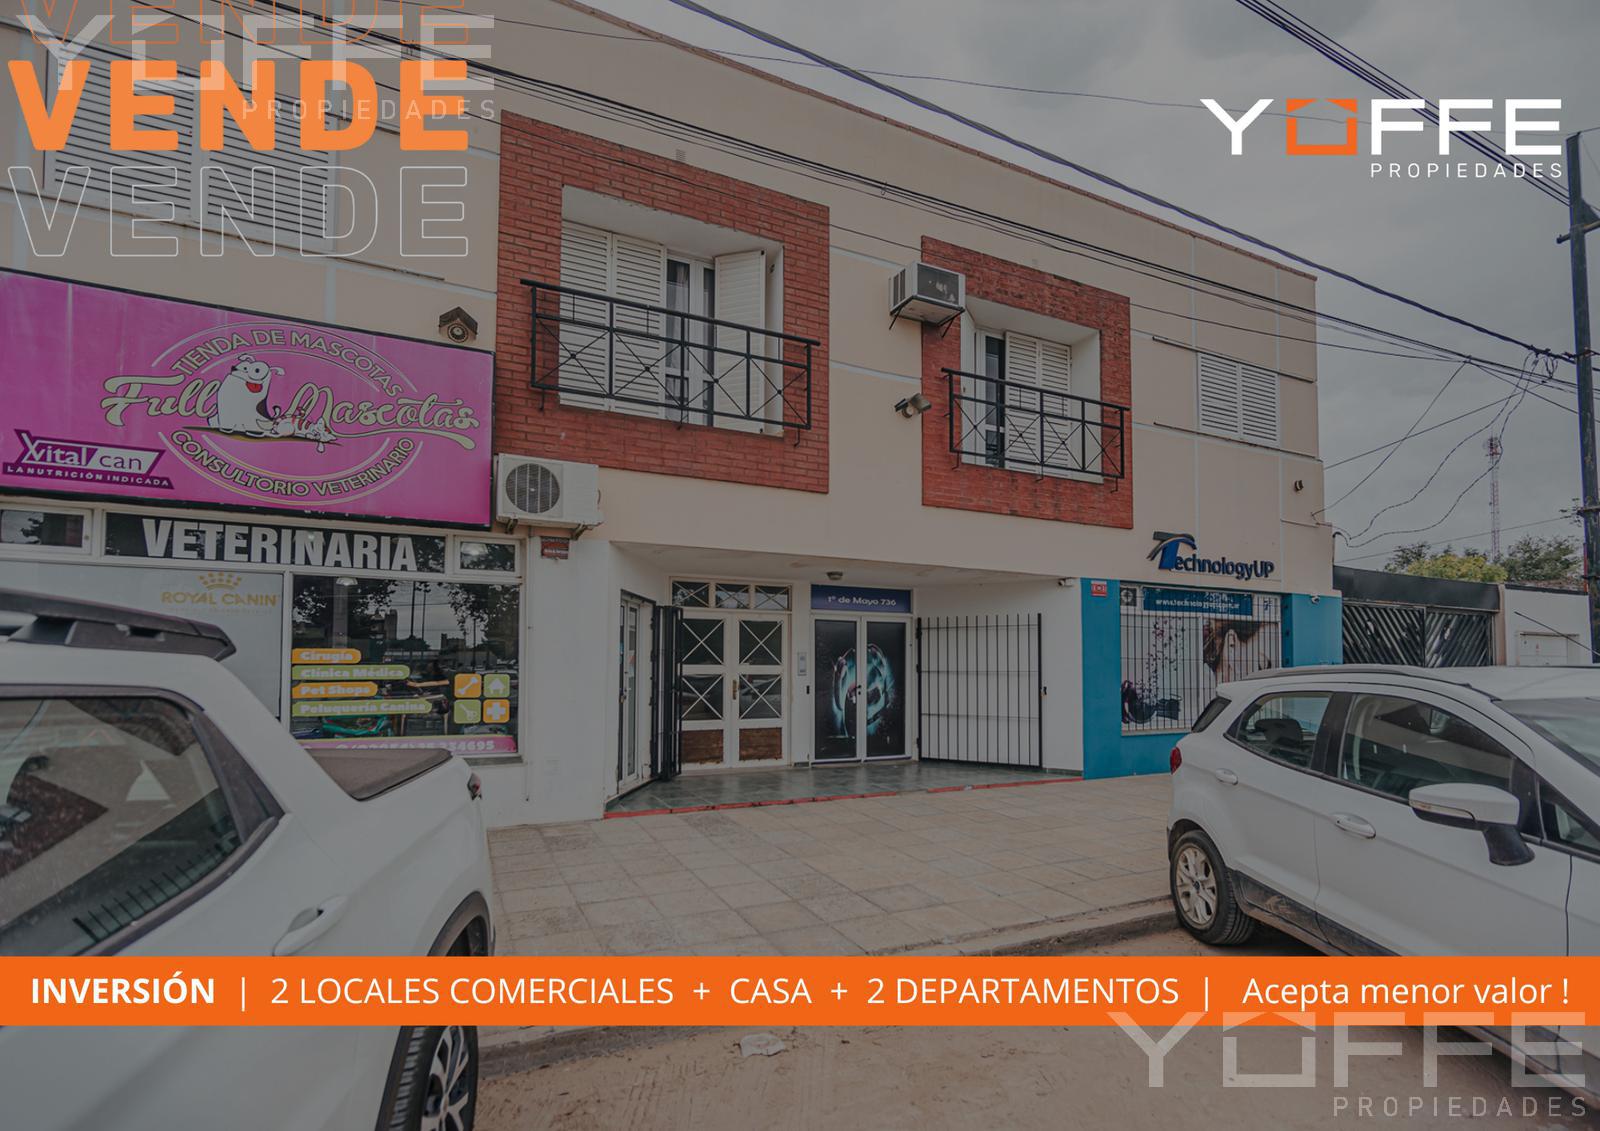 #5031557 | Sale | Apartment | Santa Rosa La Pampa Capital (Yoffe propiedades)